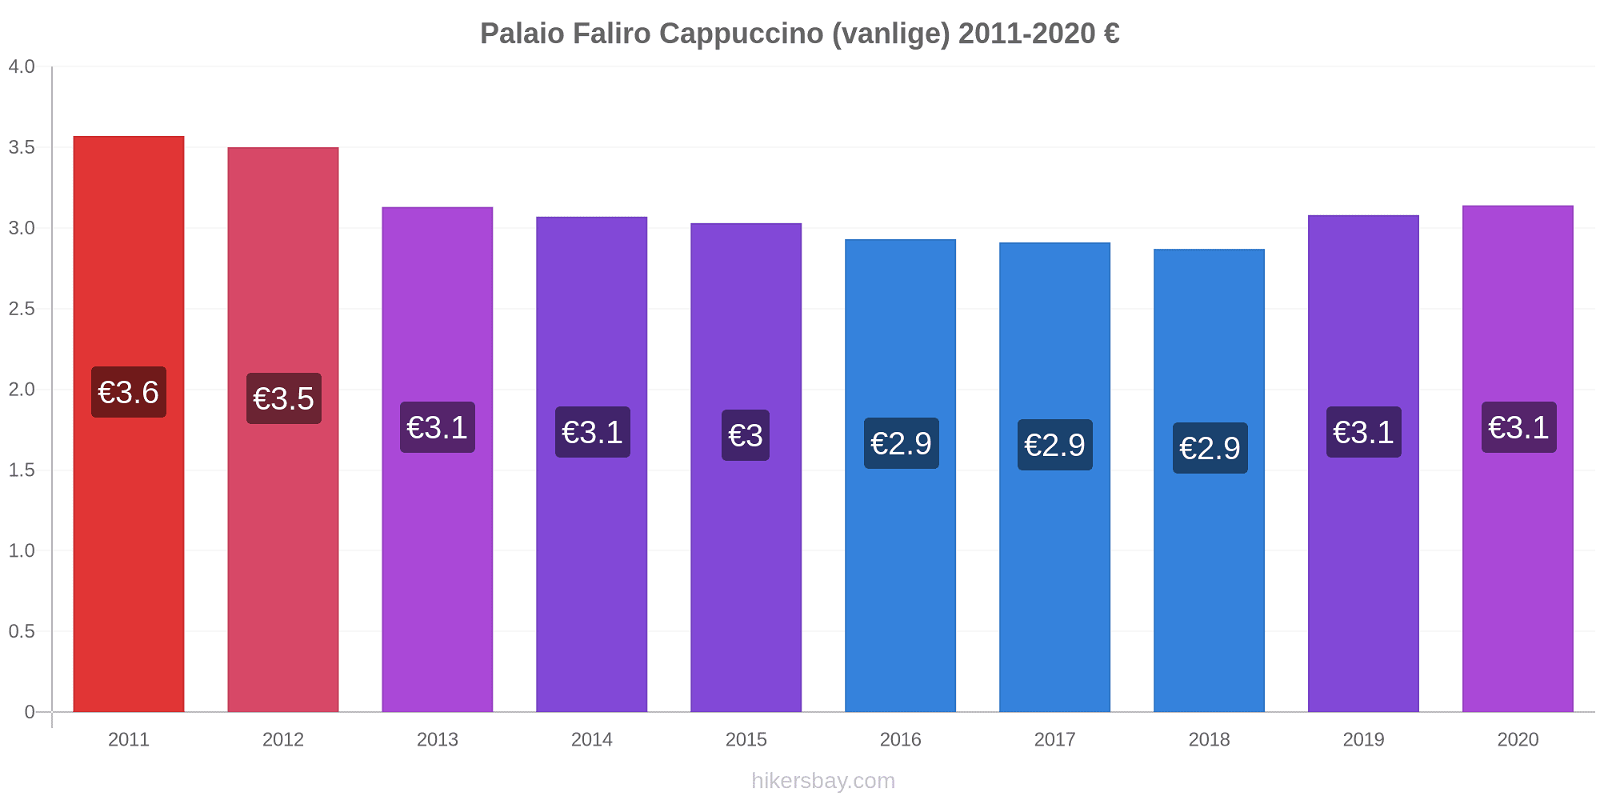 Palaio Faliro prisendringer Cappuccino (vanlige) hikersbay.com